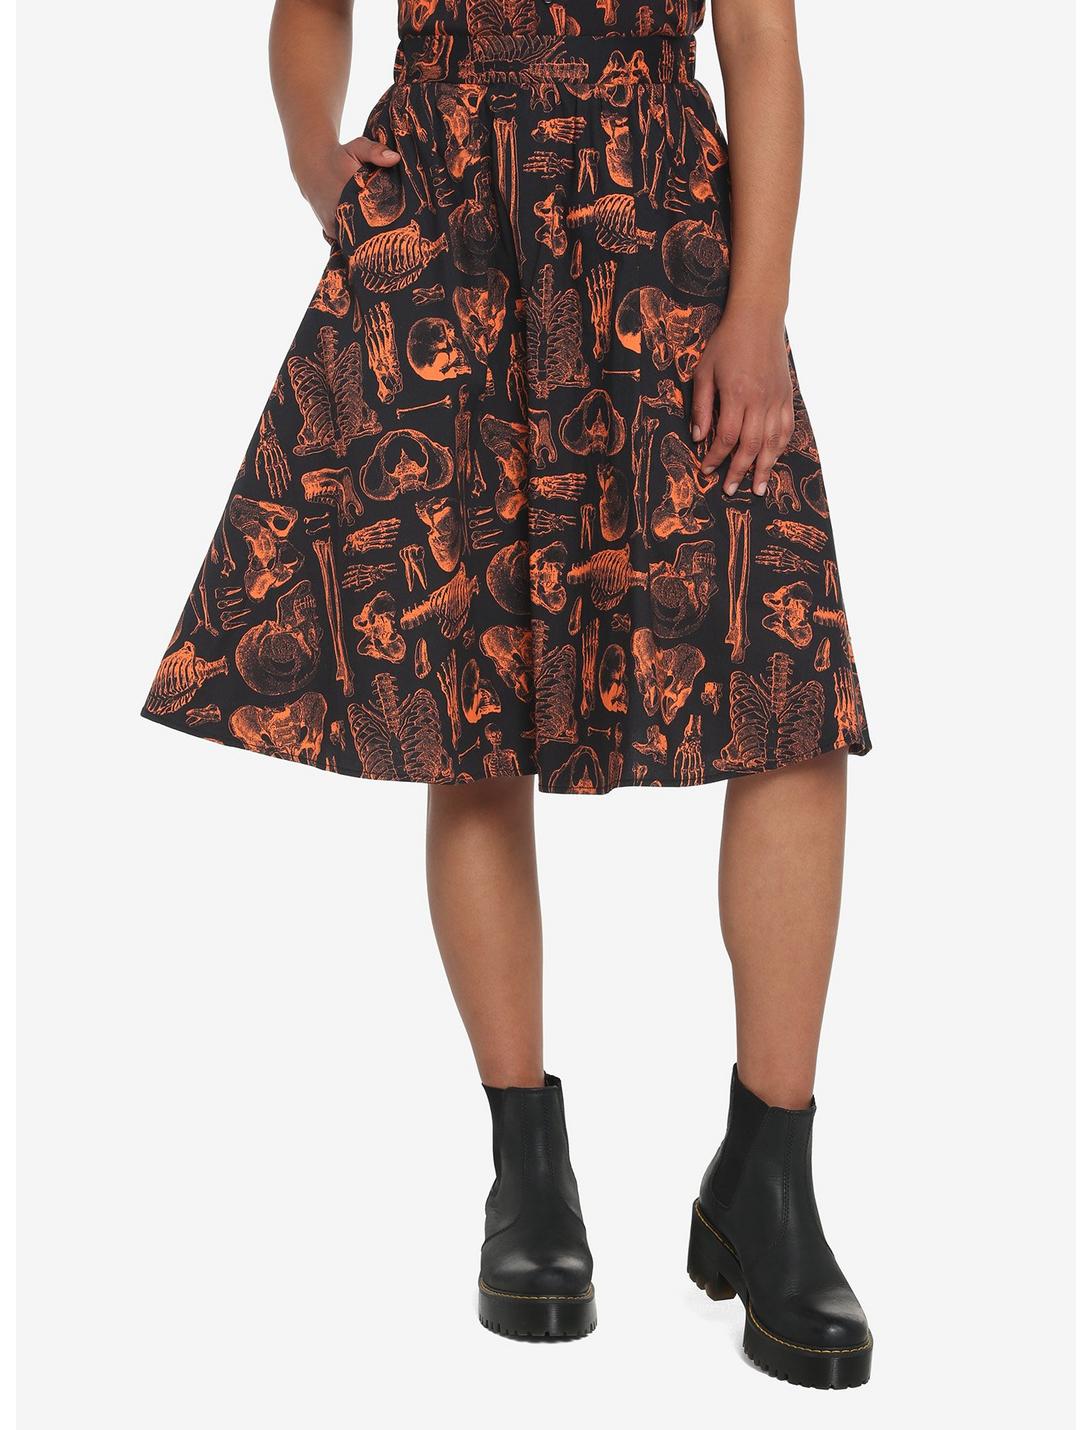 Black & Orange Skeleton Anatomy Retro Skirt, MULTI, hi-res